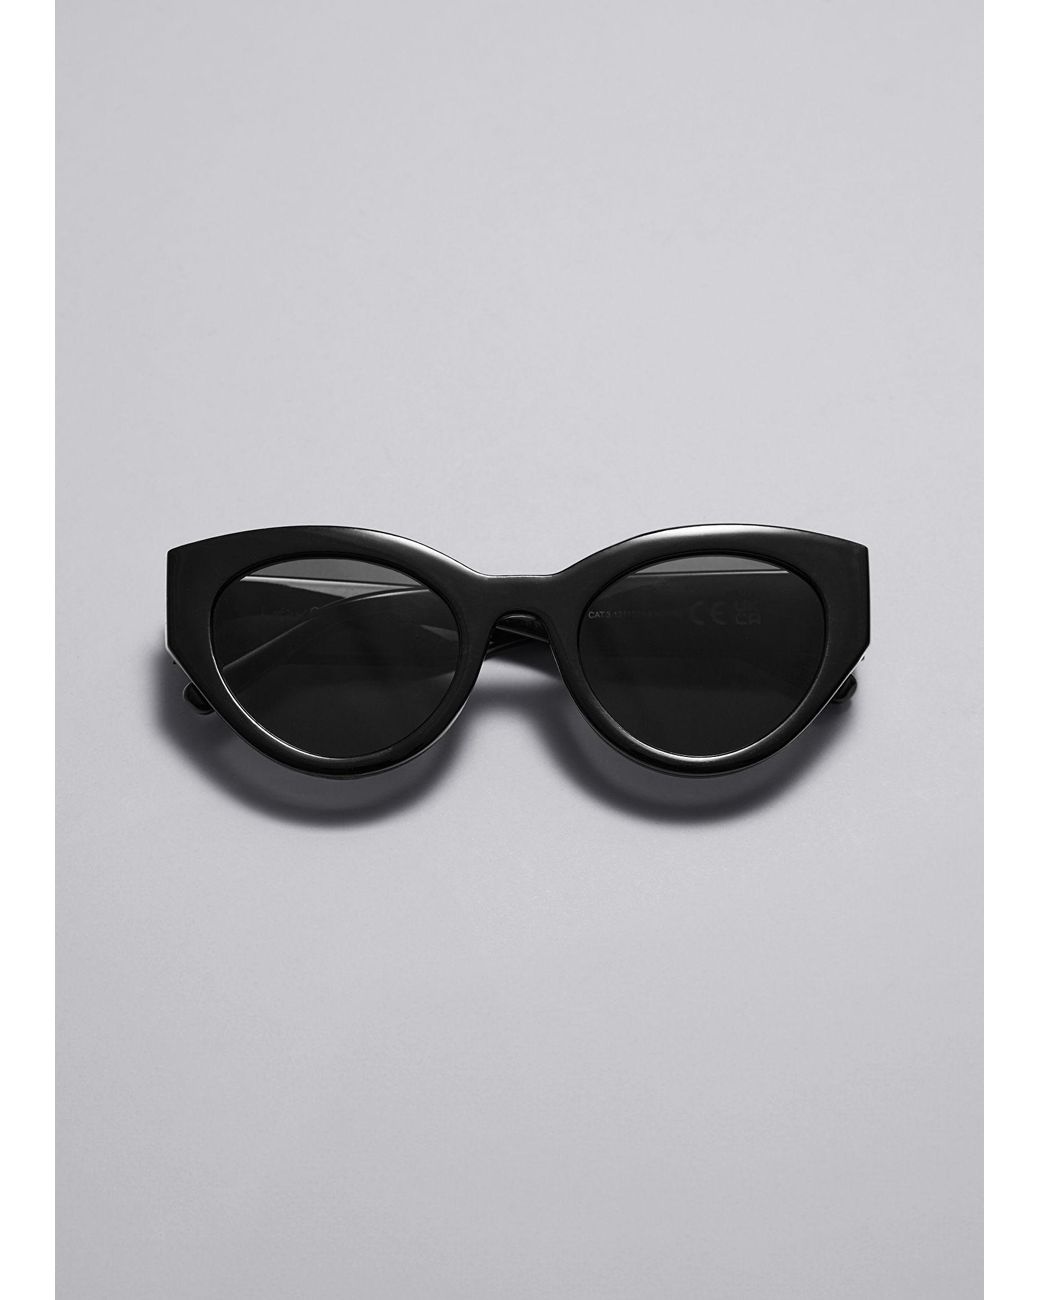 Voyage Exclusive Wayfarer Polarized Sunglasses for Men & Women (Grey L